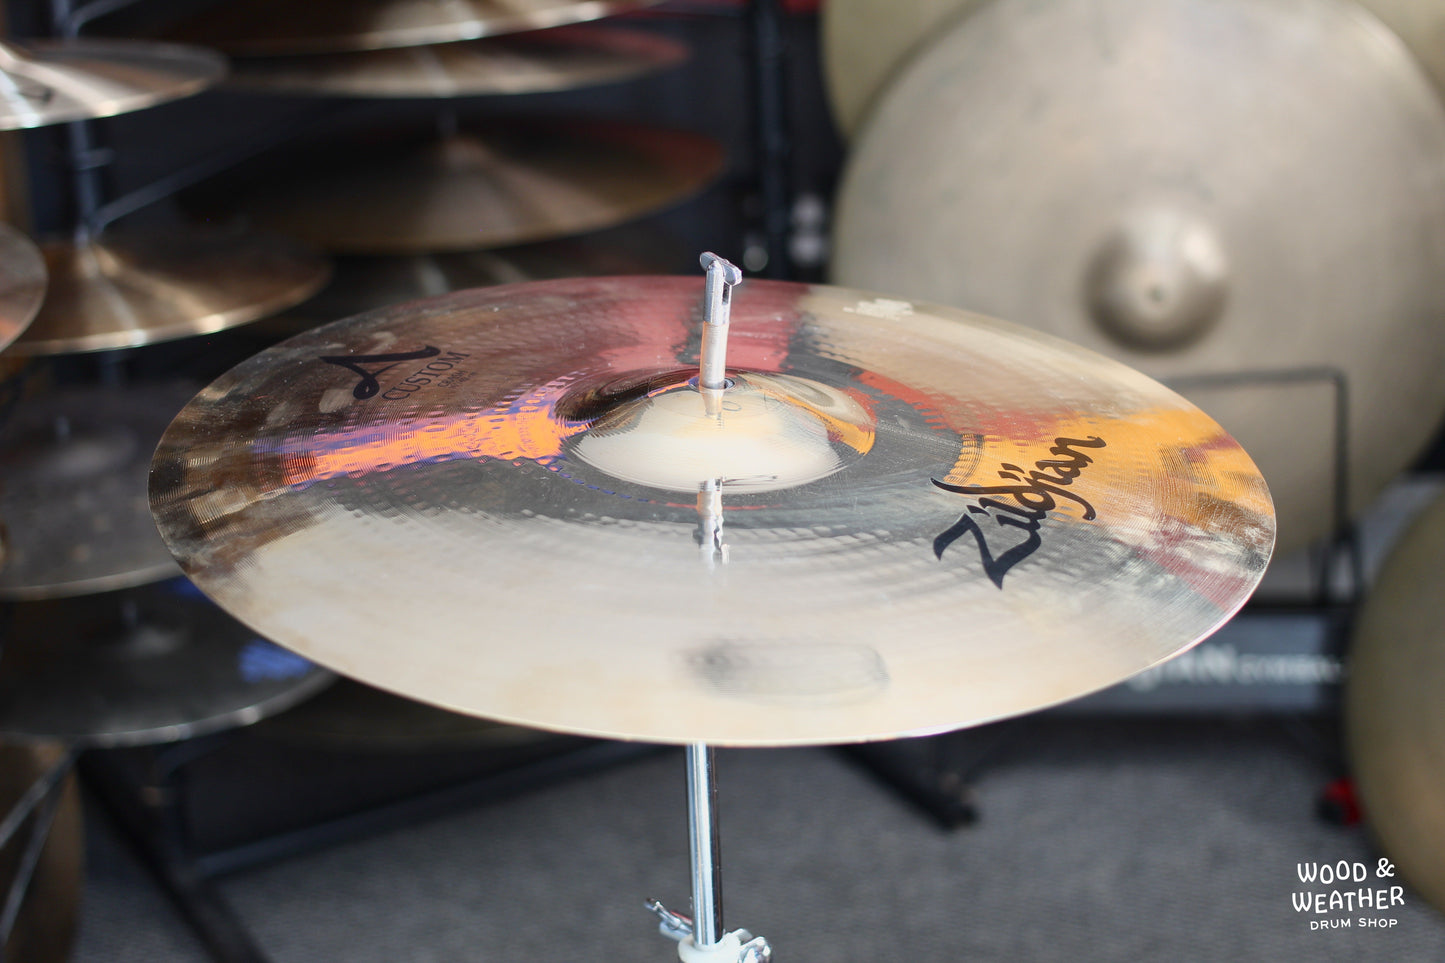 Used Zildjian 16" A Custom Crash Cymbal 995g